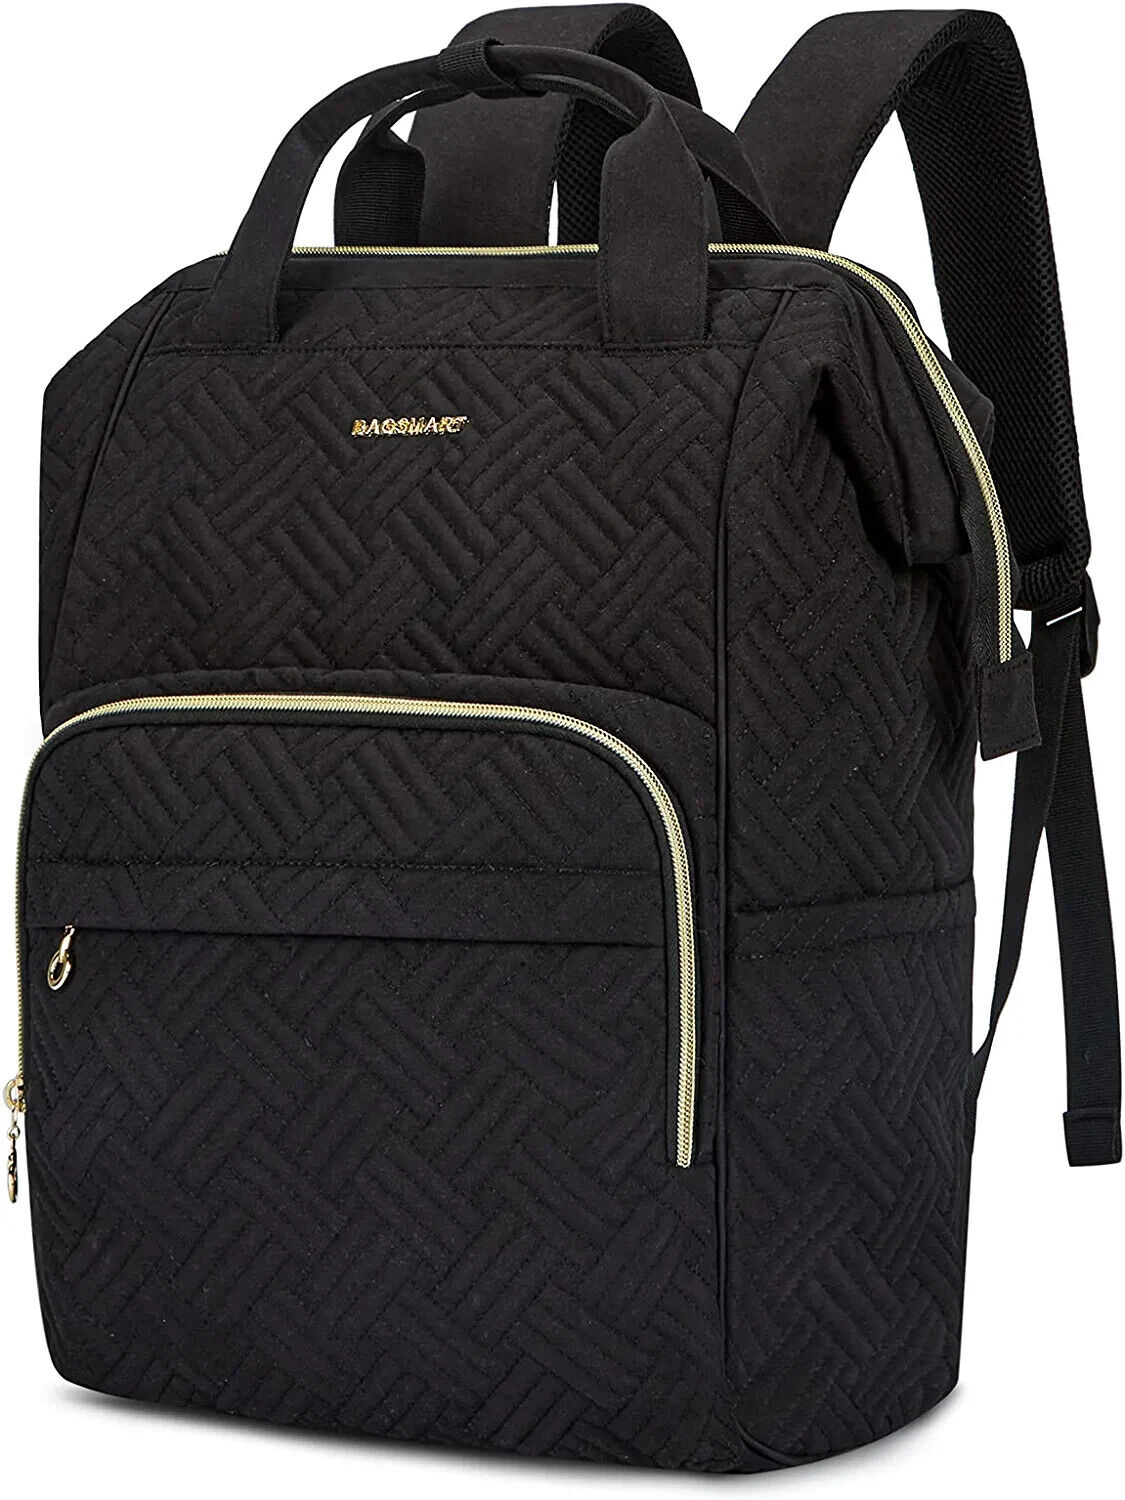 Laptop Backpack for Women, School Travel Fits 15.6 Inch laptop Black